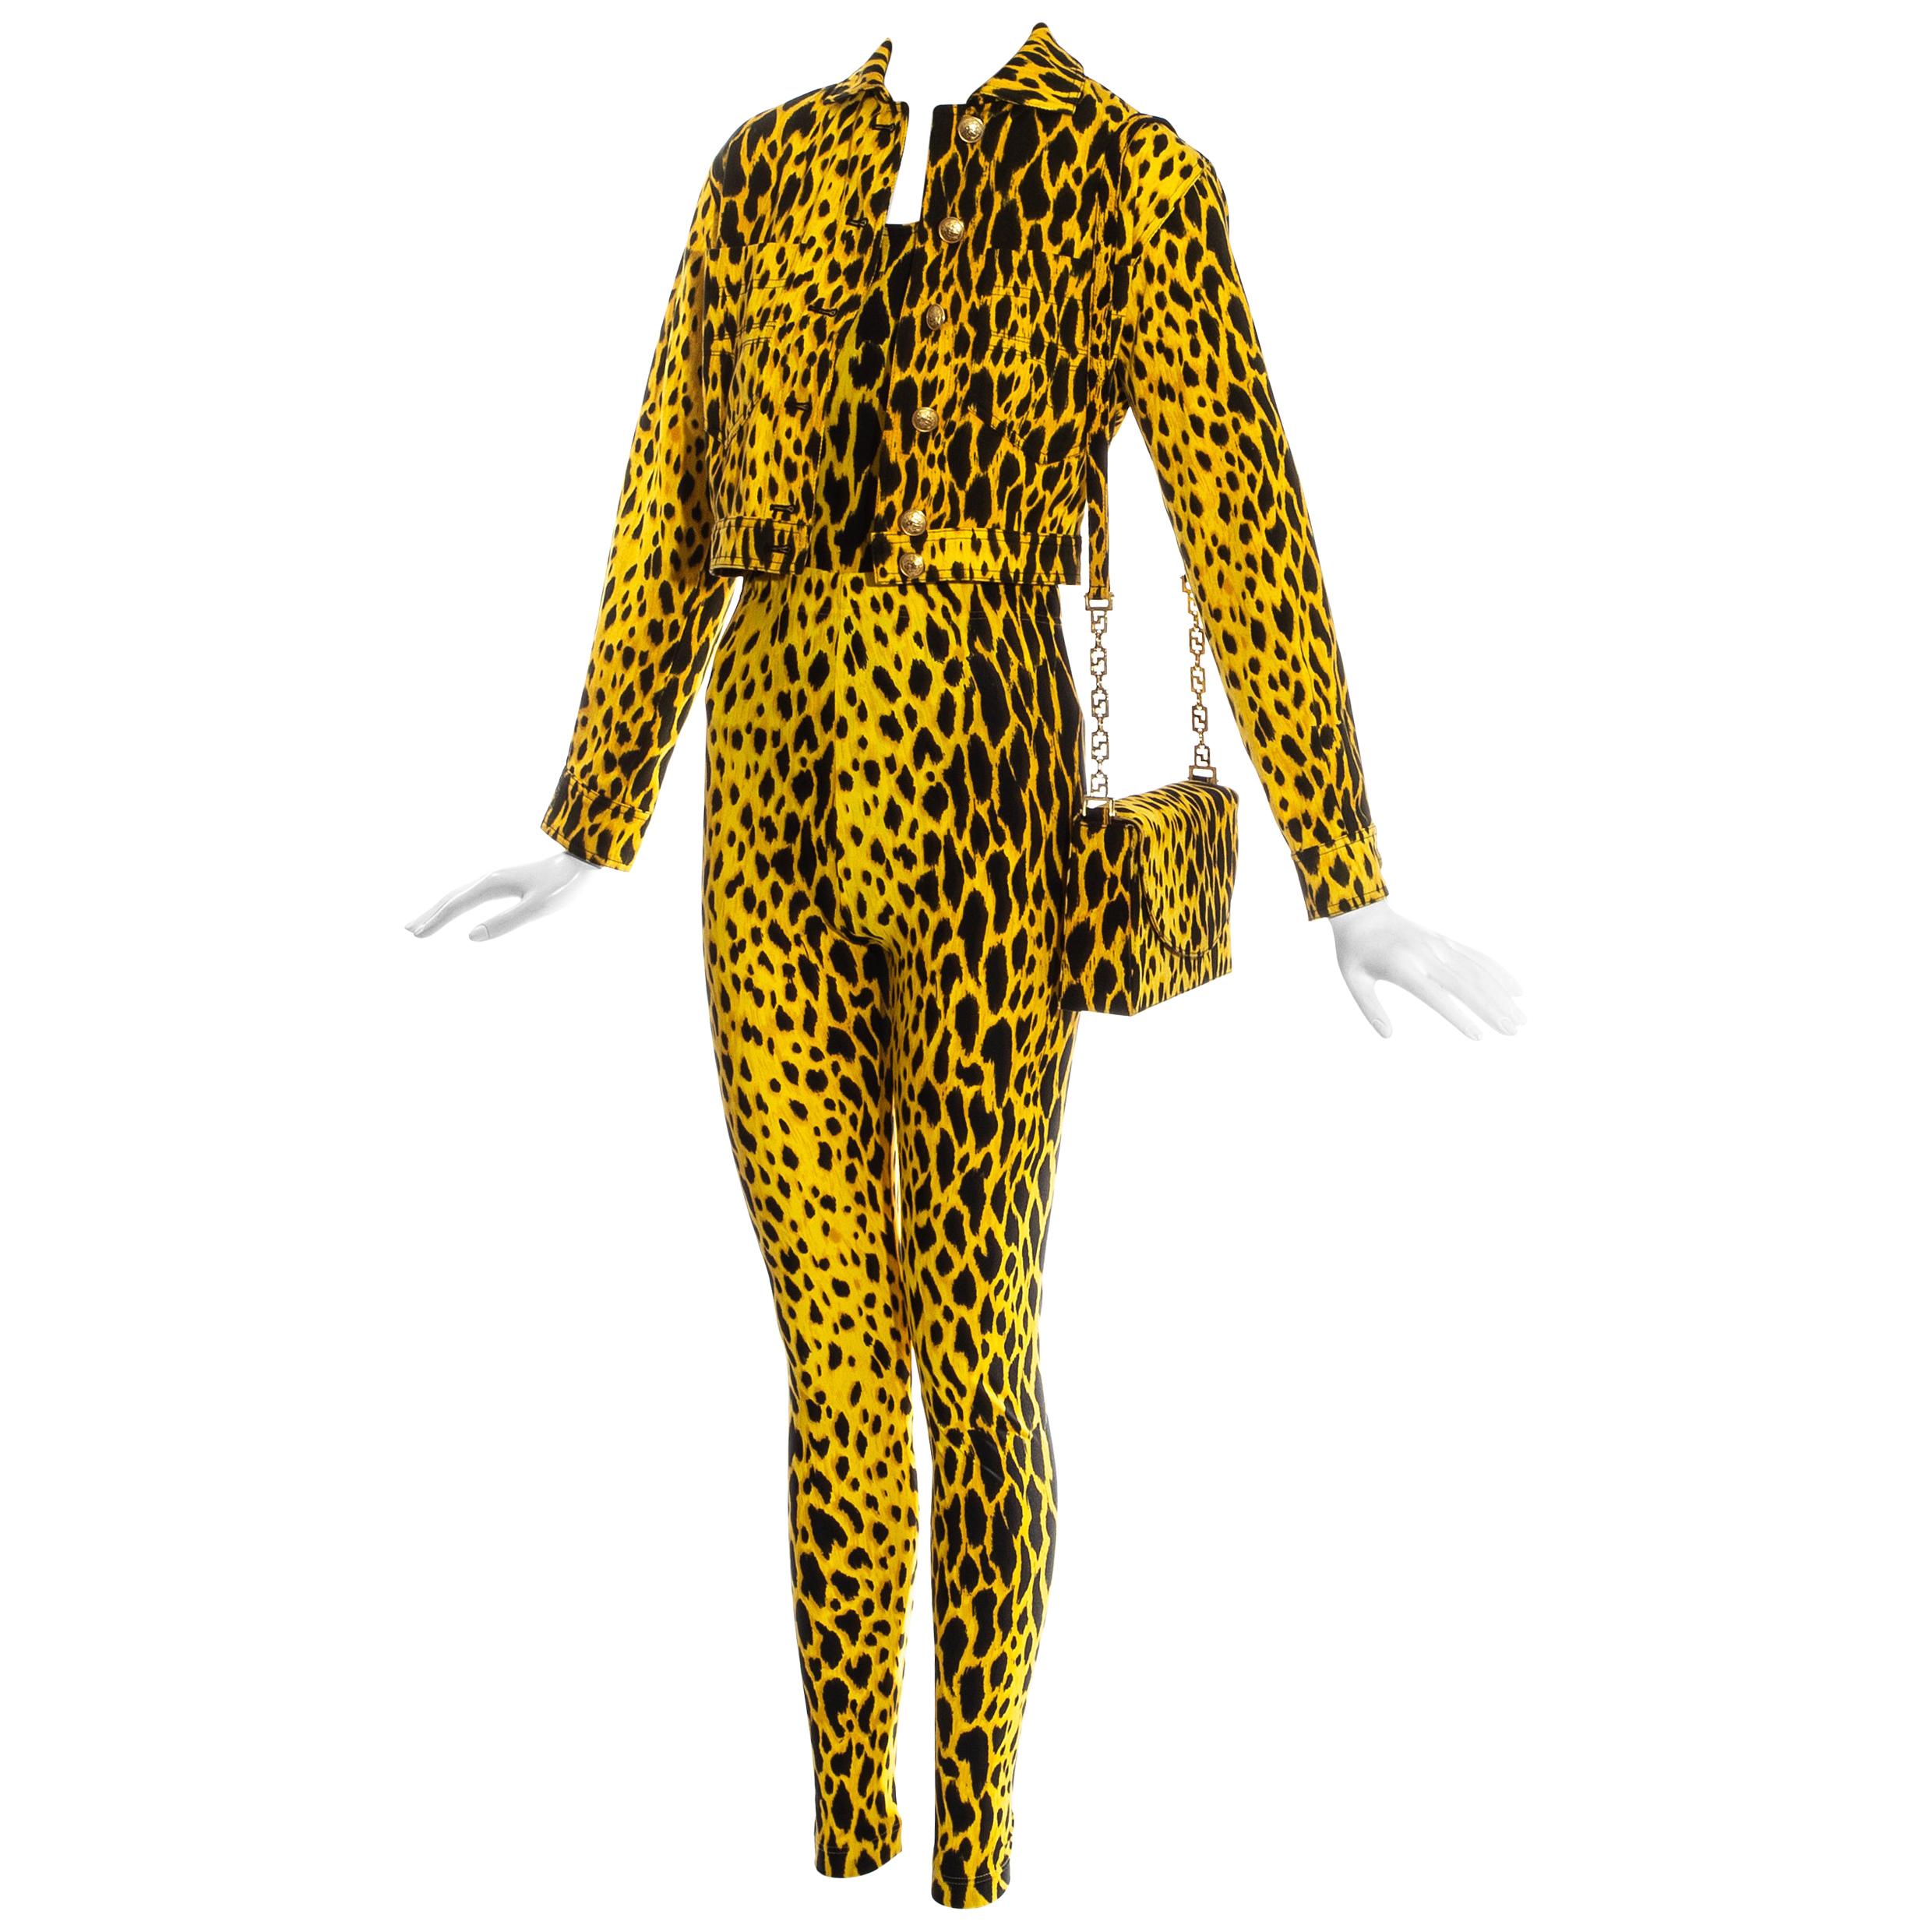 Gianni Versace yellow leopard print four piece ensemble, ss 1992